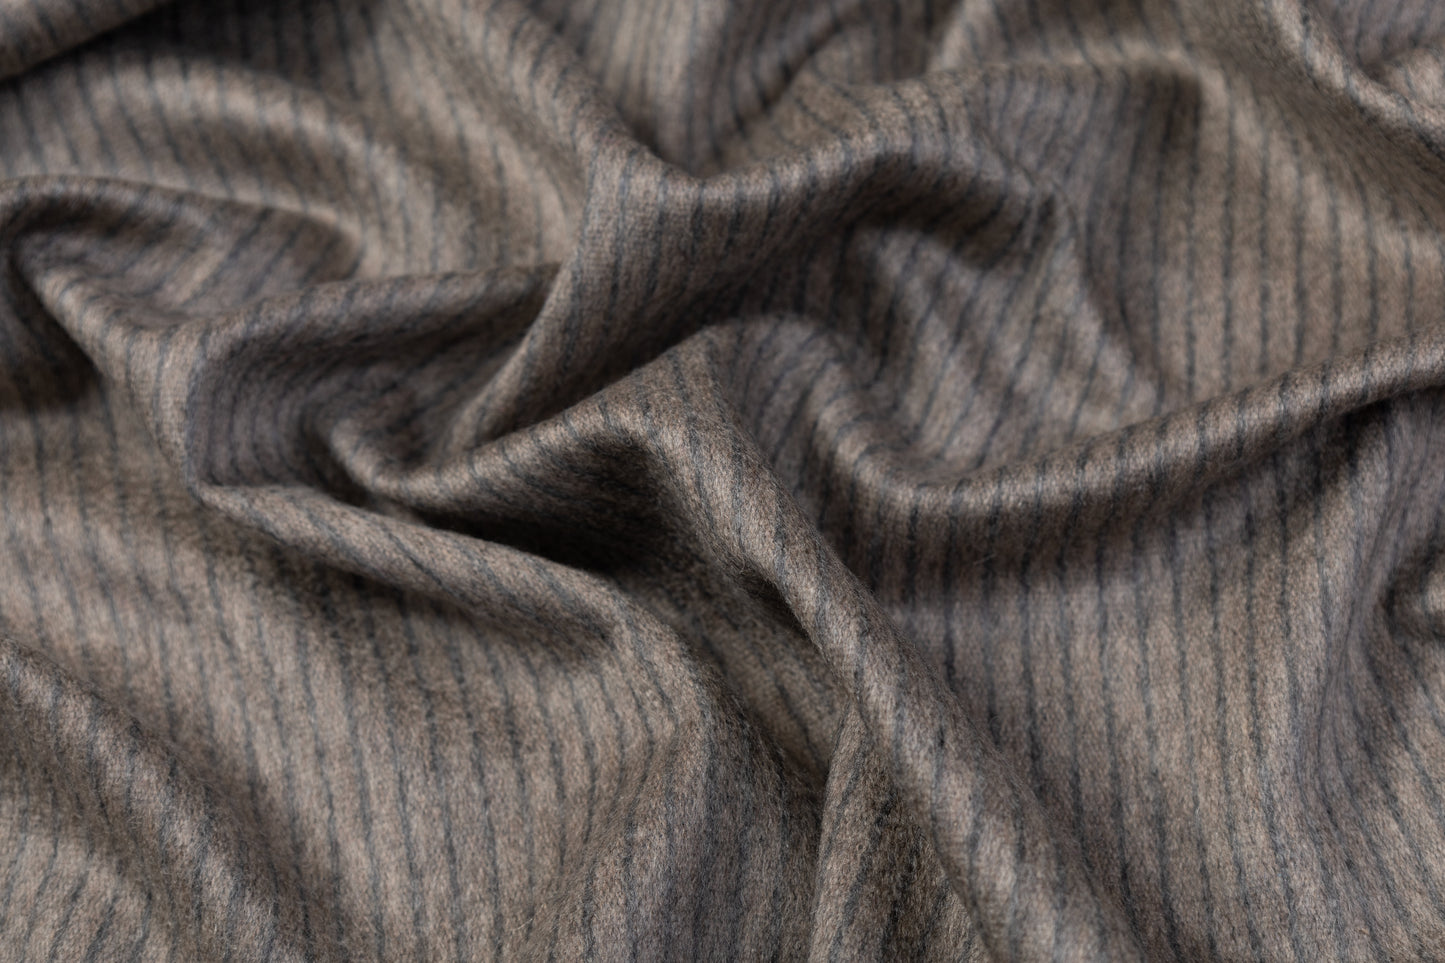 Striped Italian Cashmere Coating - Gray